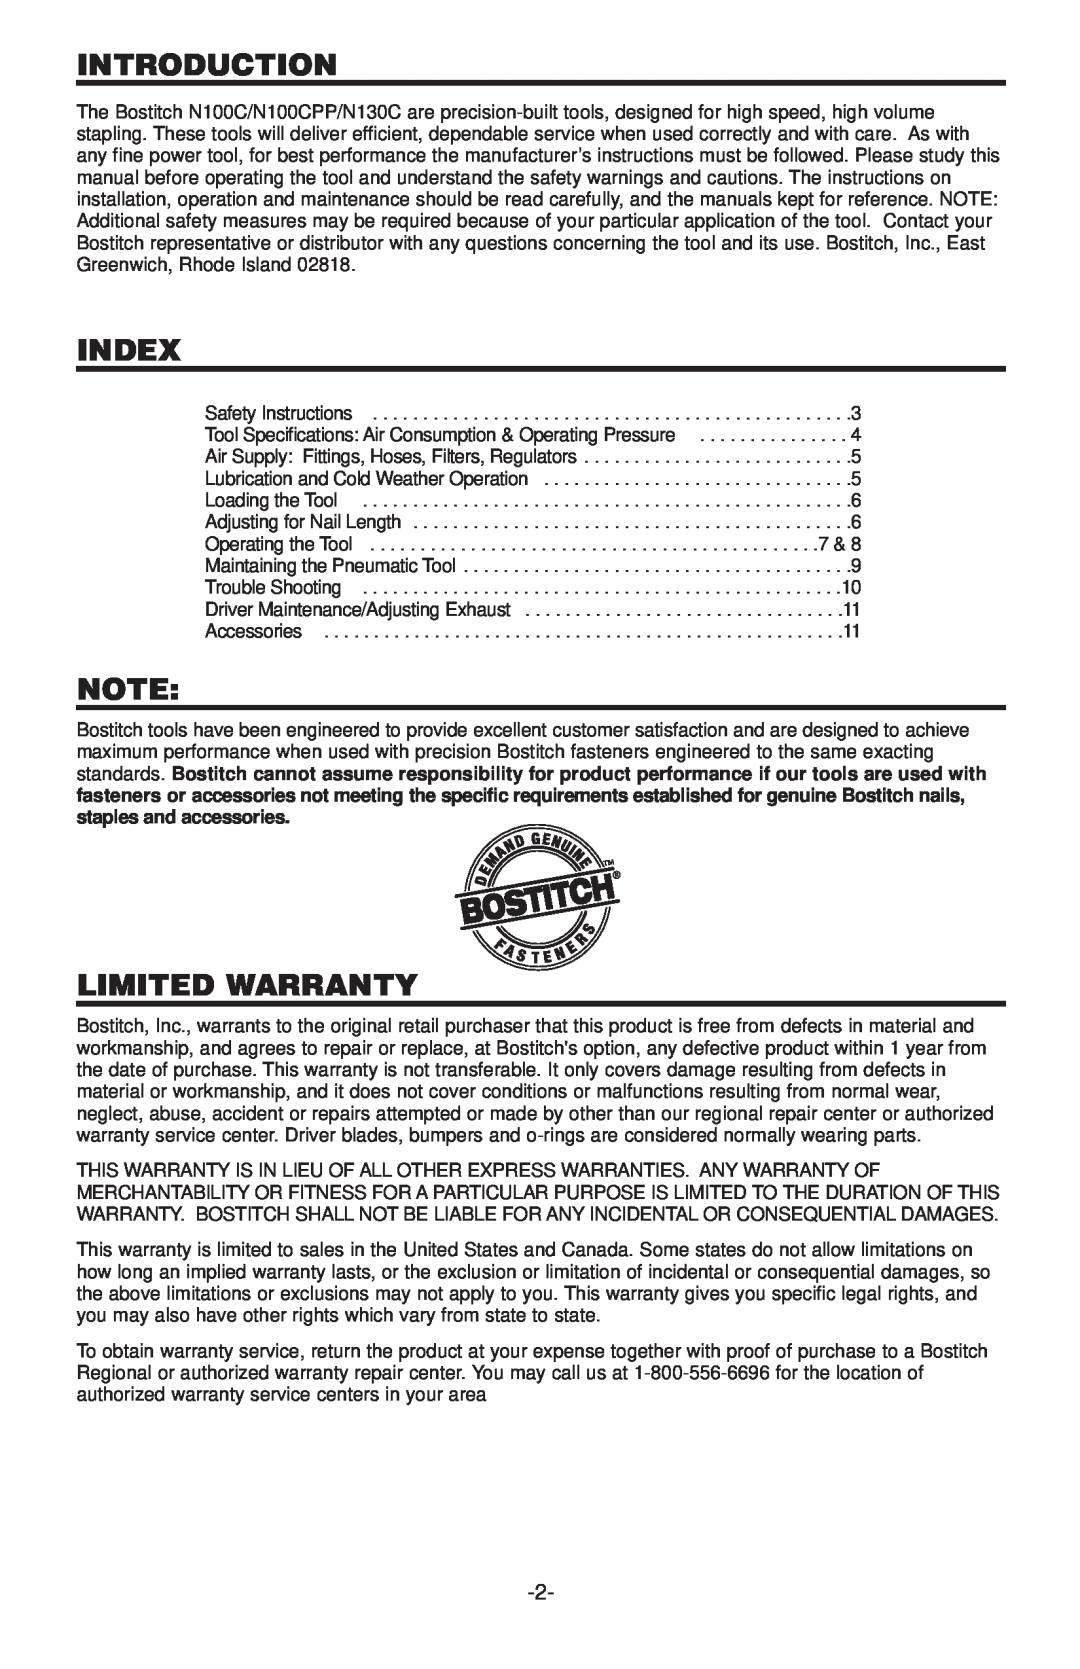 Bostitch N100CPP, N130C manual Introduction, Index, Limited Warranty 